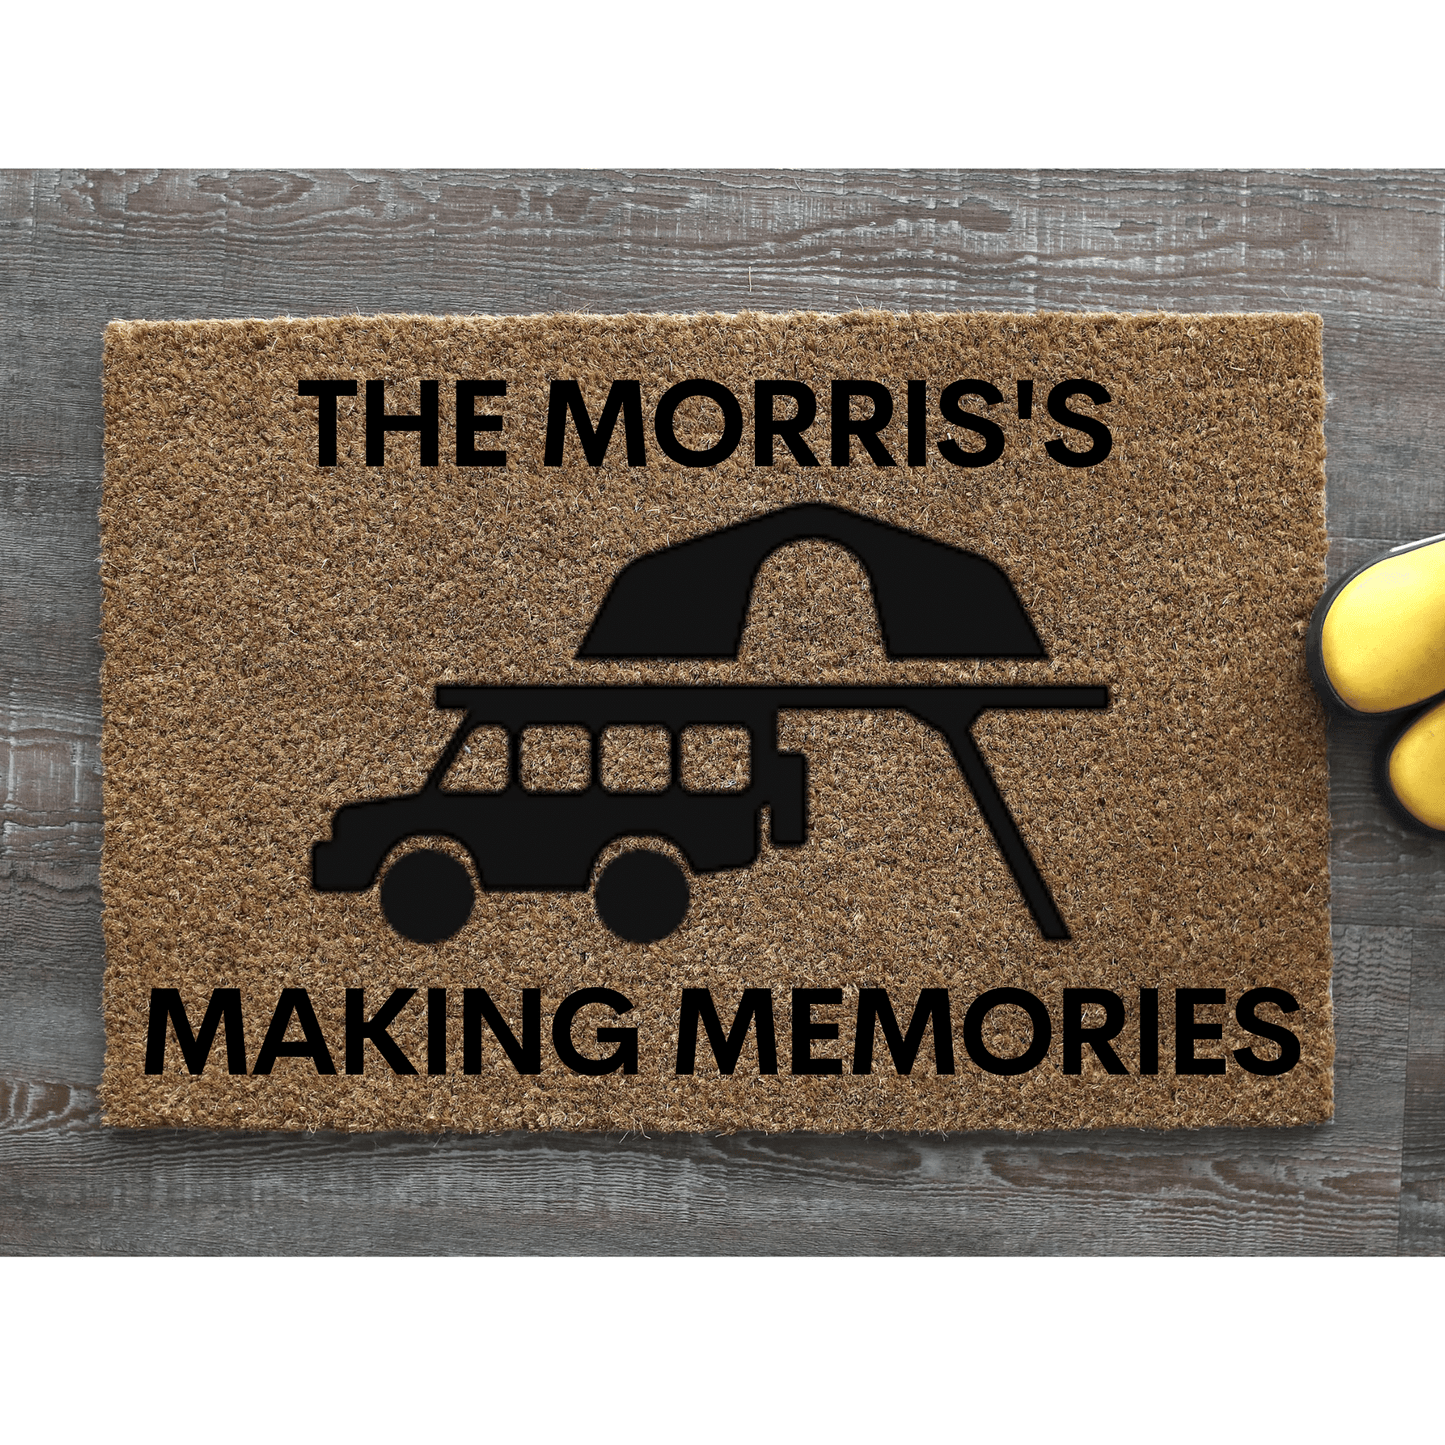 Making memories camping doormat - Personalised Doormat Australia